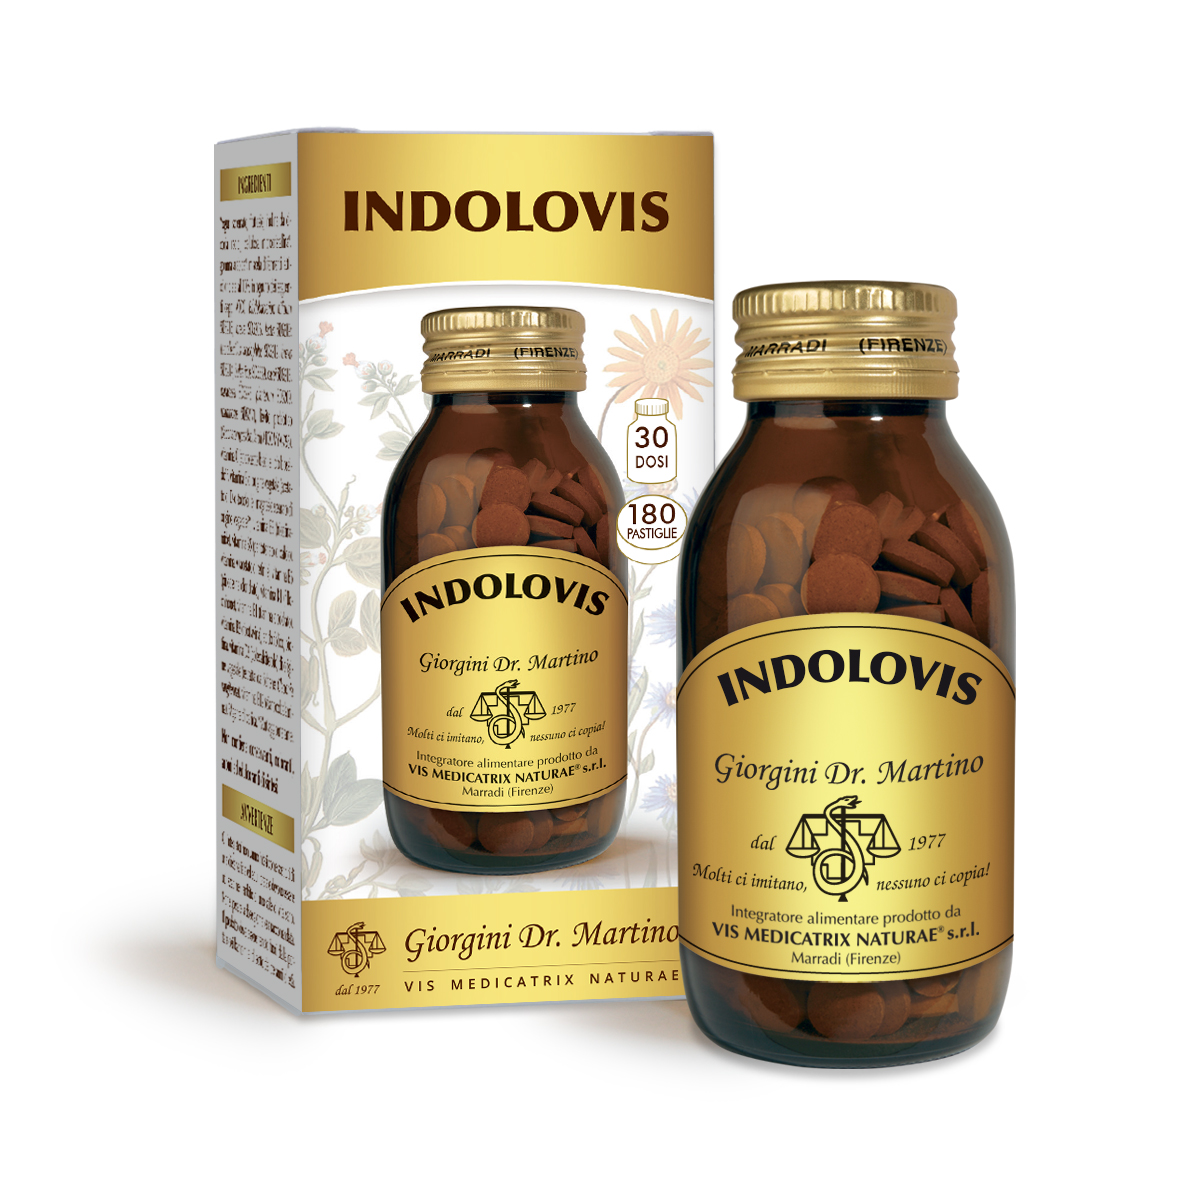 INDOLOVIS 90 g - 180 pastiglieda 500 mg